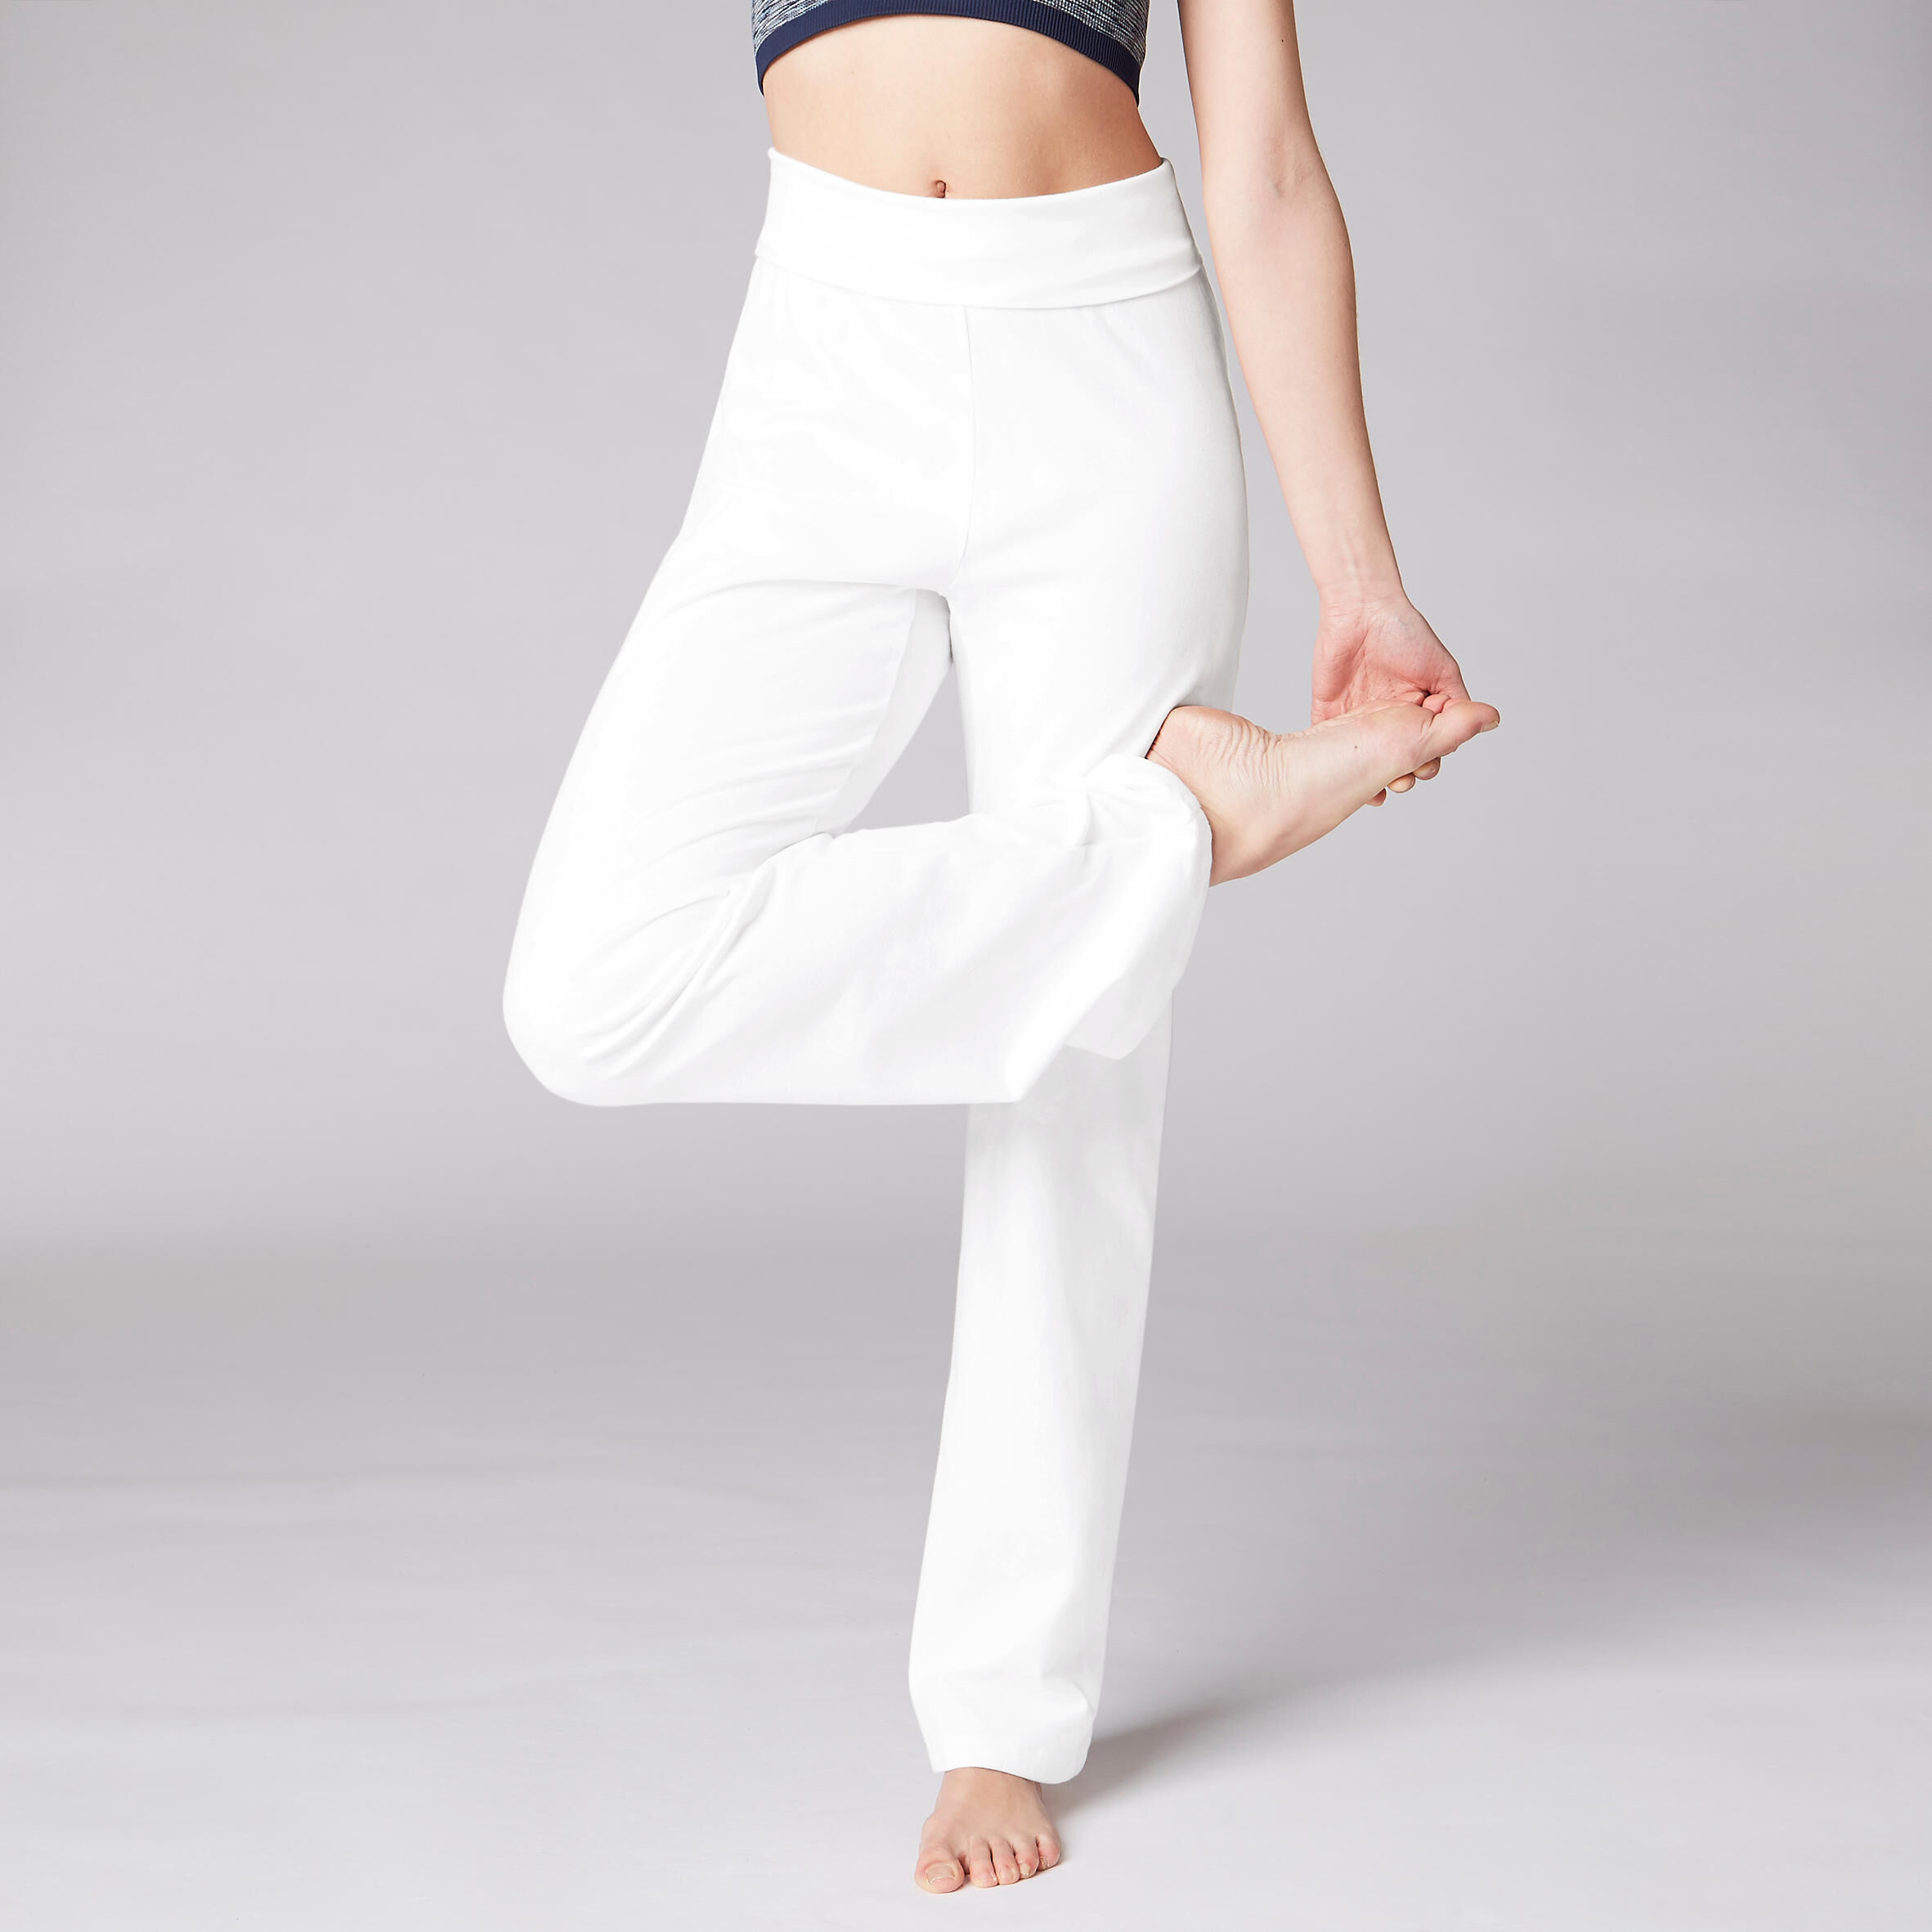  White Yoga Pants